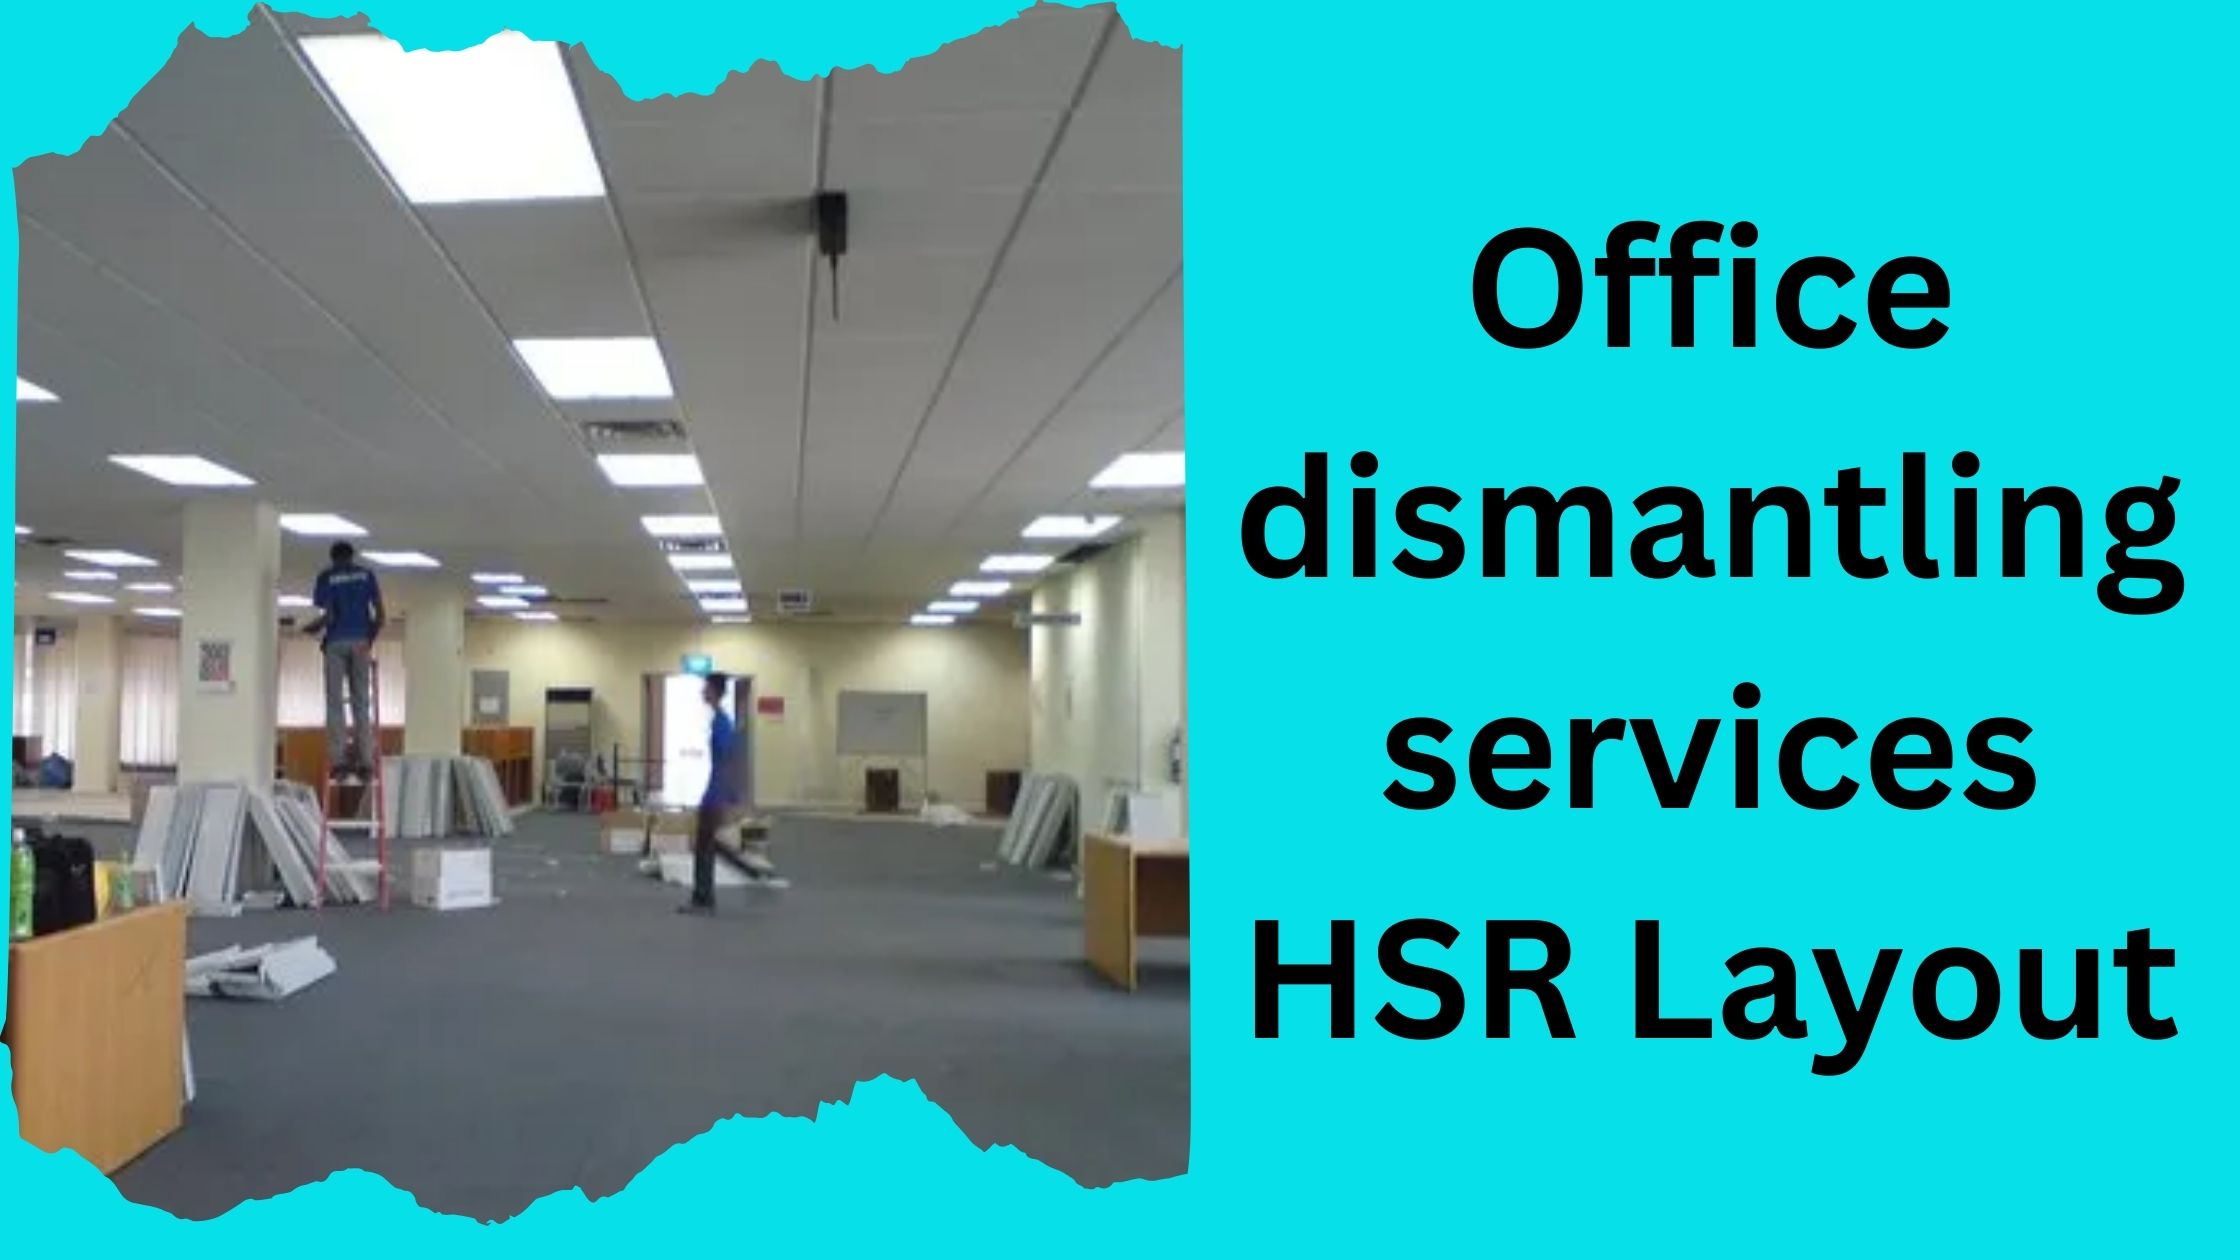 Office dismantling services HSR Layout